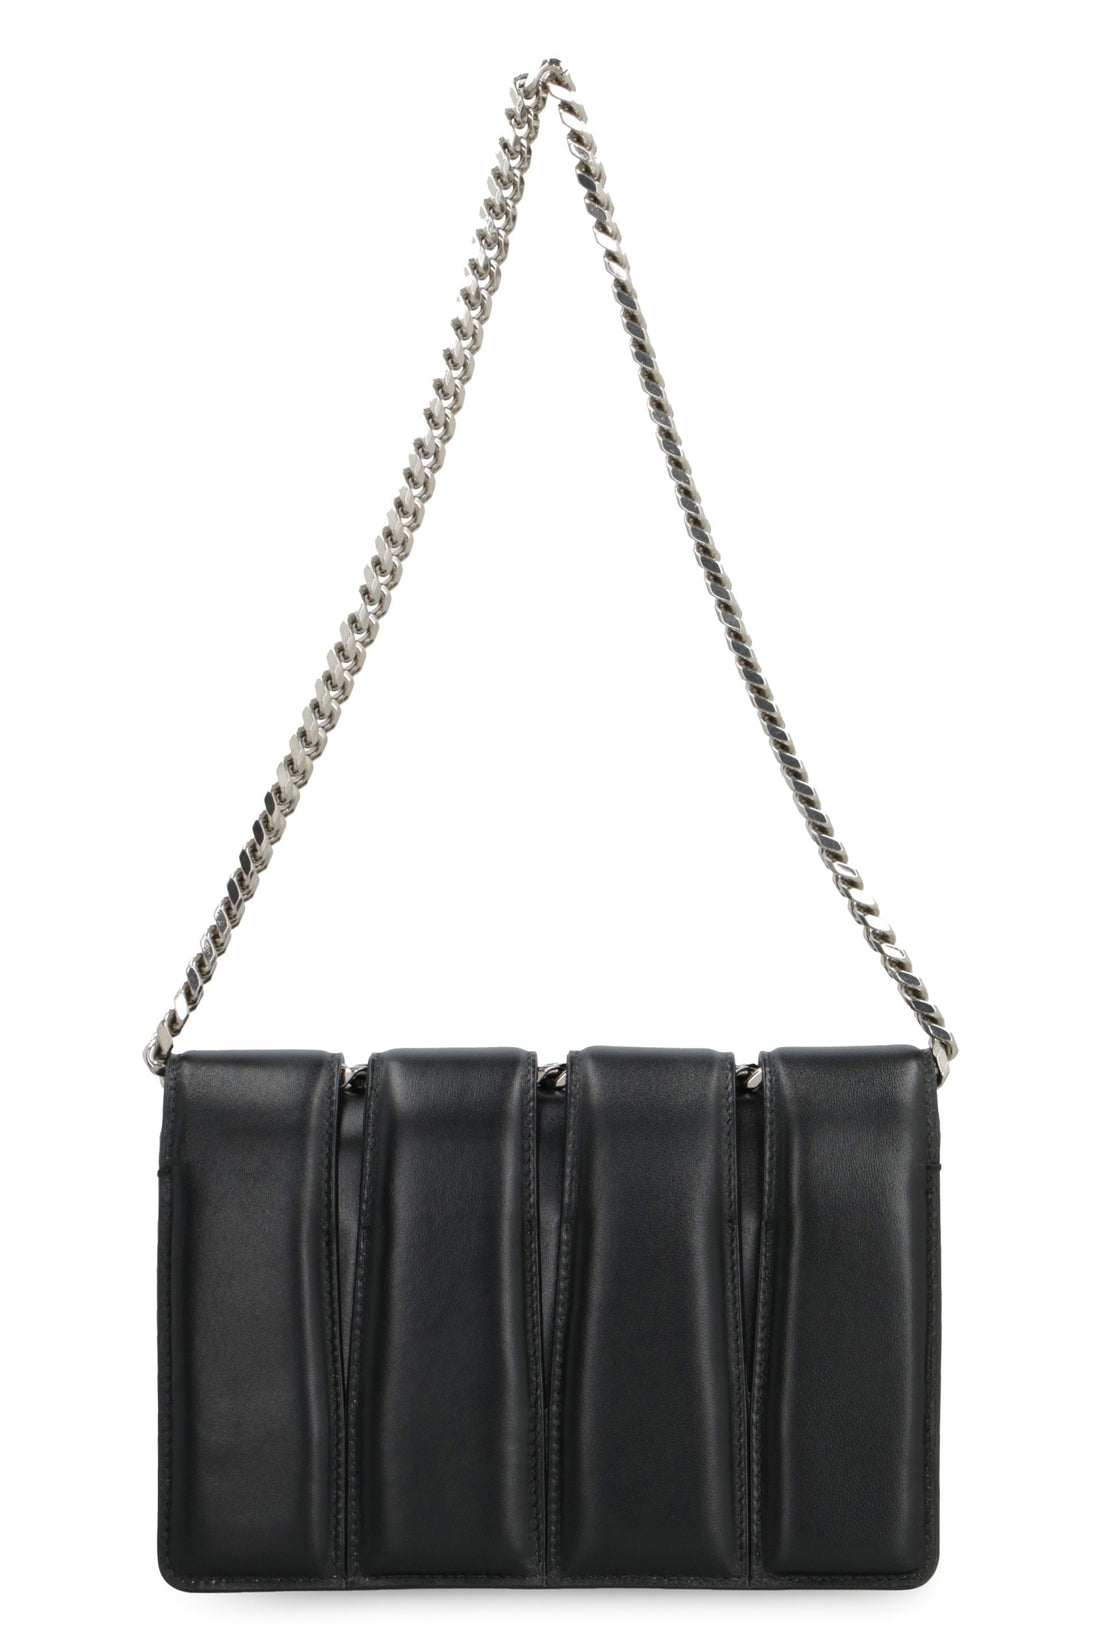 Alexander McQueen-OUTLET-SALE-The Slash leather shoulder bag-ARCHIVIST